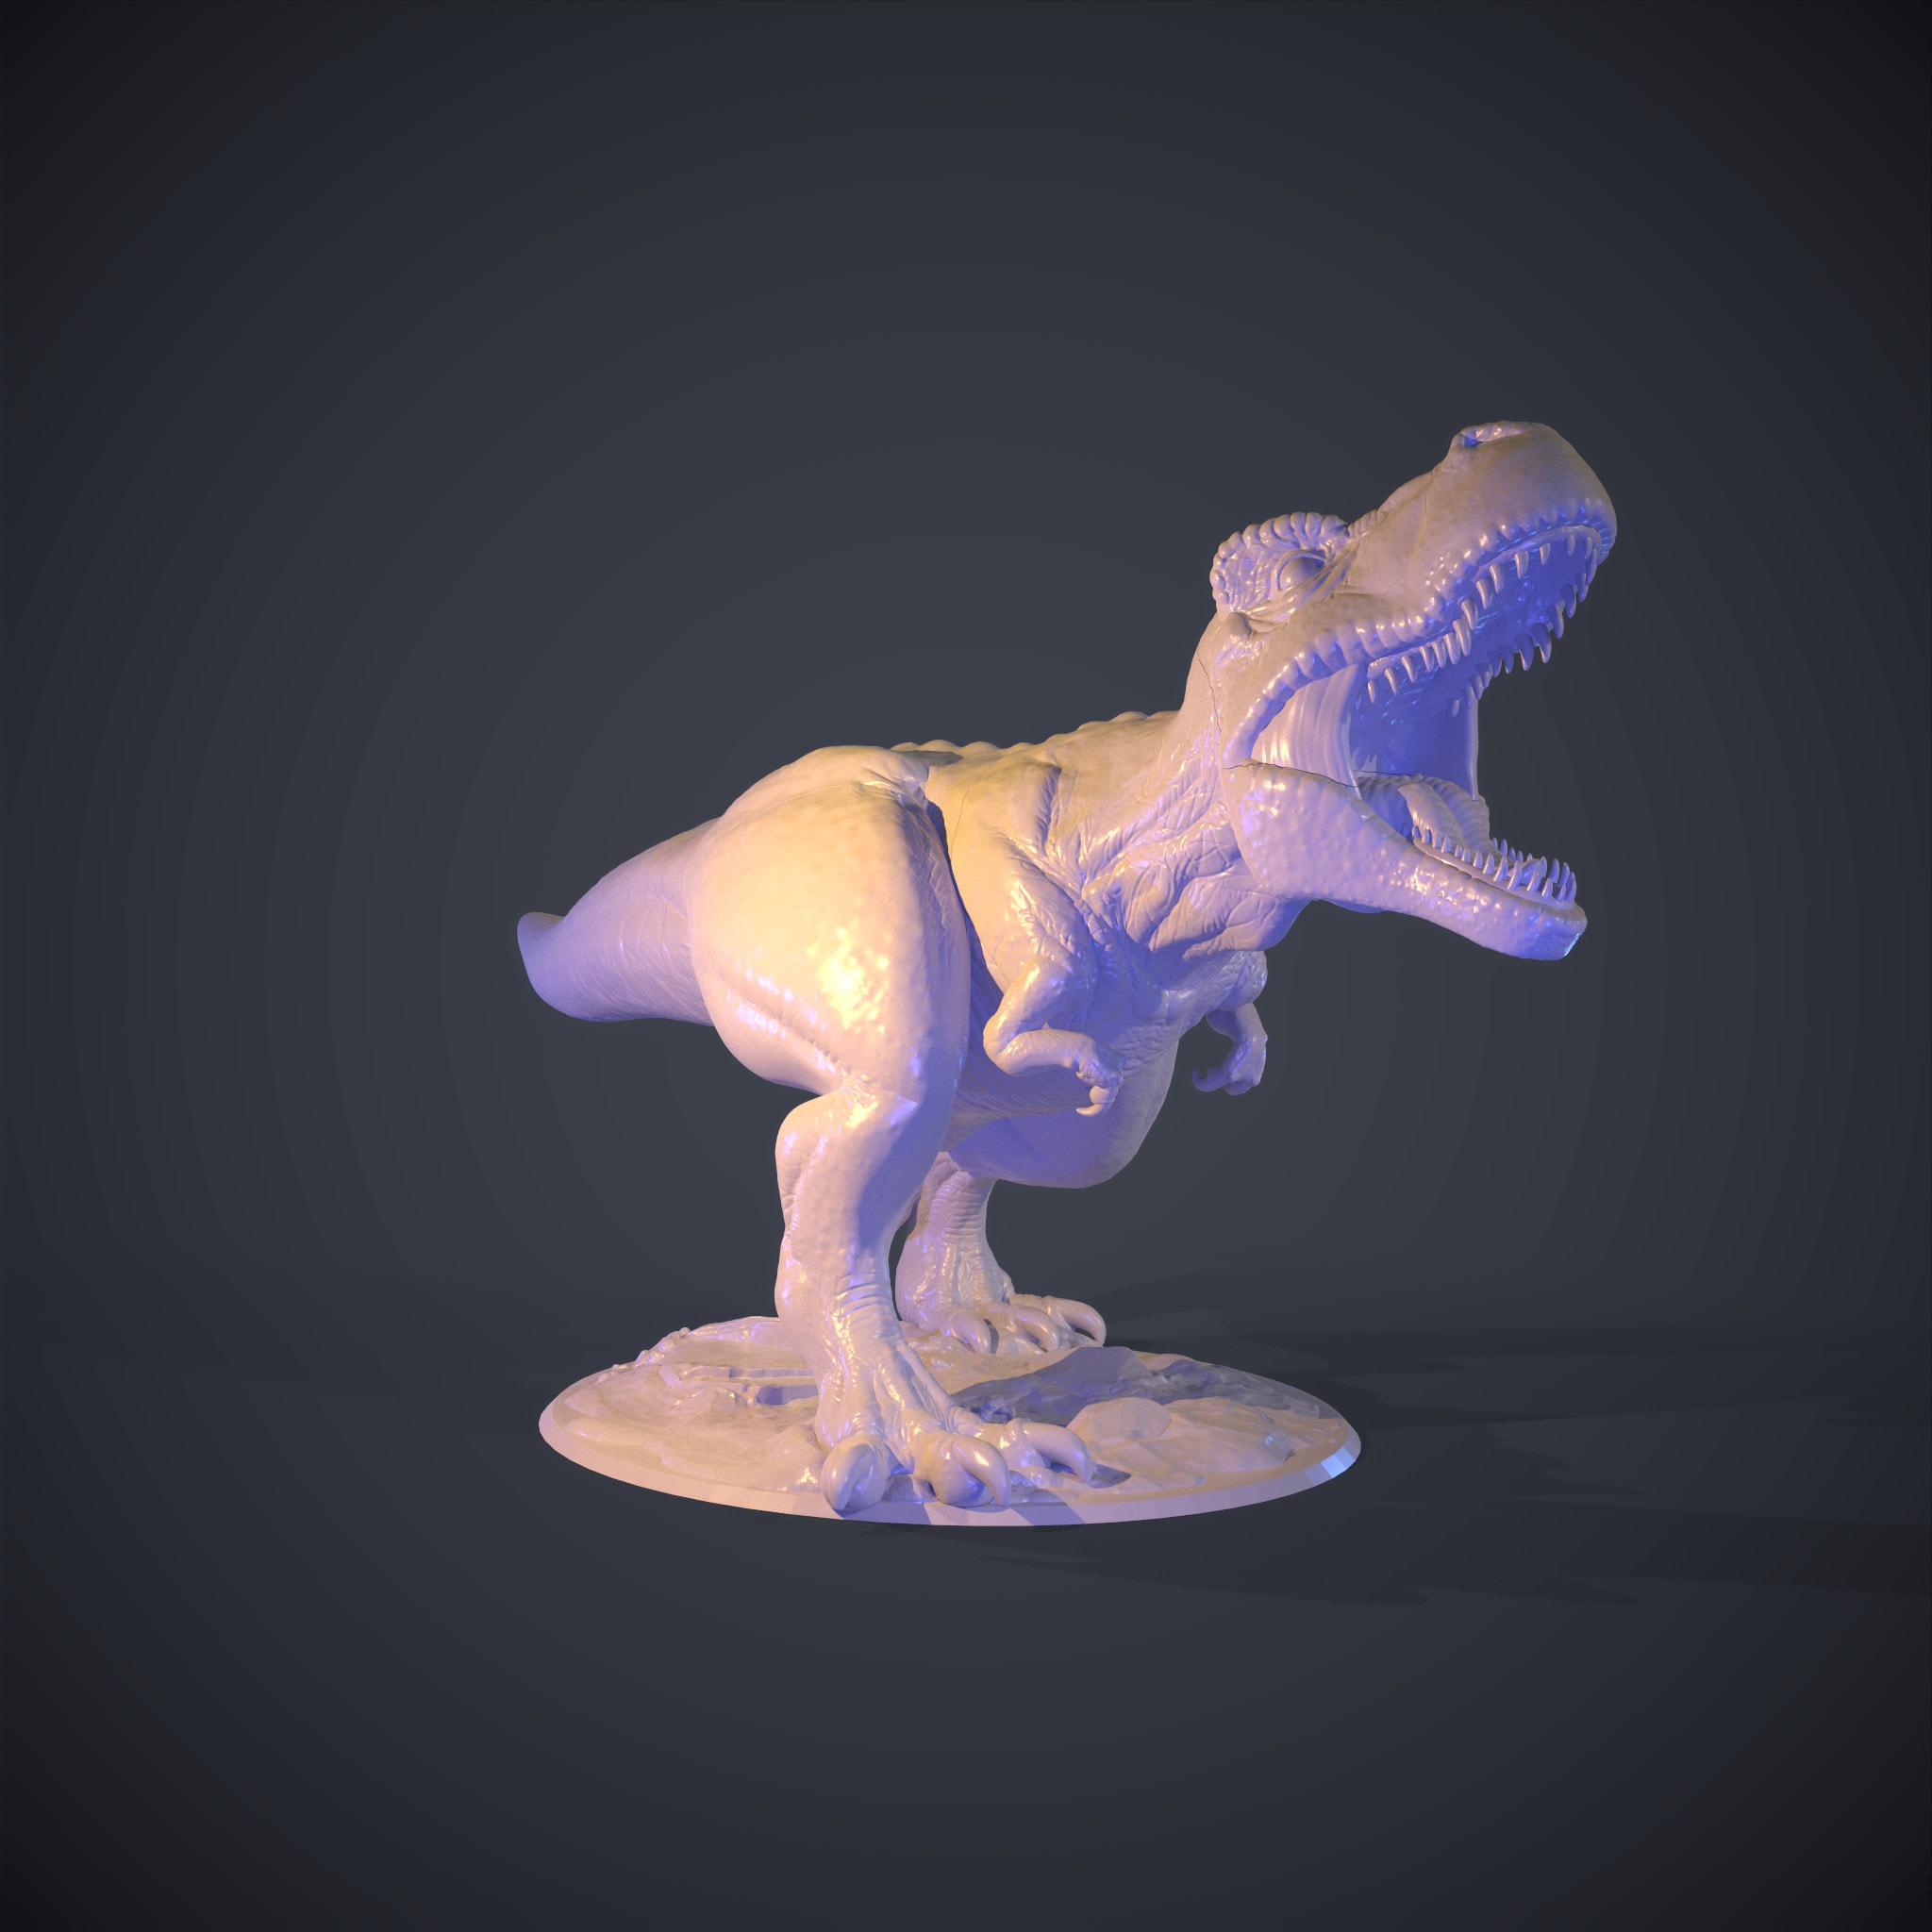 Tyrannosaurus Rex - Worlds Over Run: Beast of Burden Collection